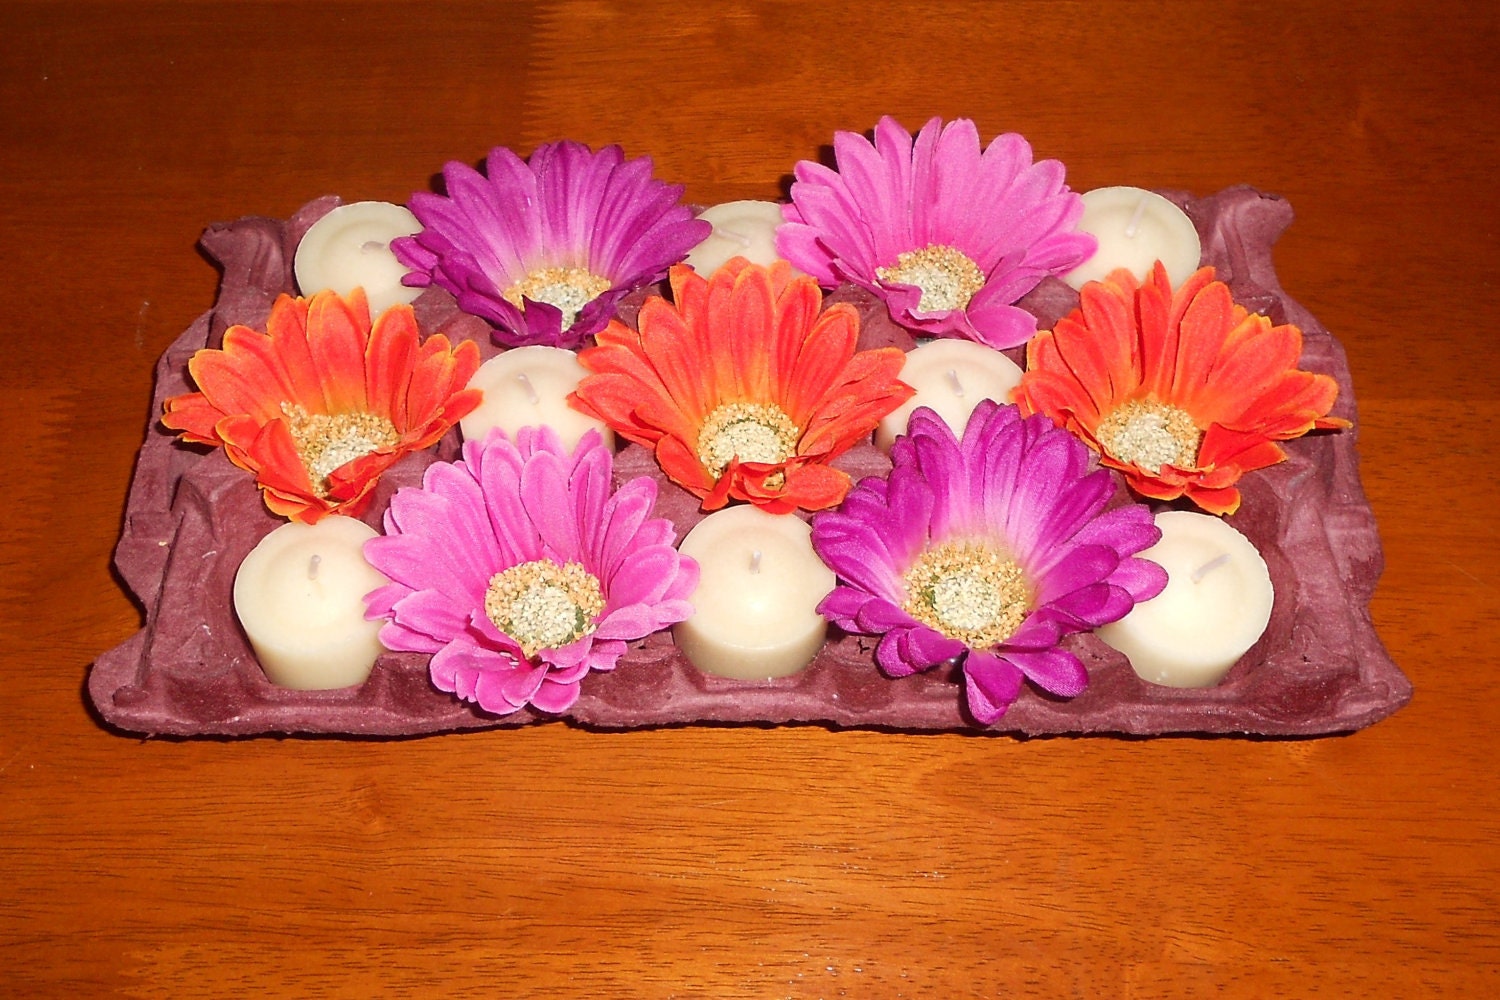 Springtime Fiesta: Vibrant Orange, Pink and Purple Gerber Daisy Candle Recycled Egg Carton Centerpiece